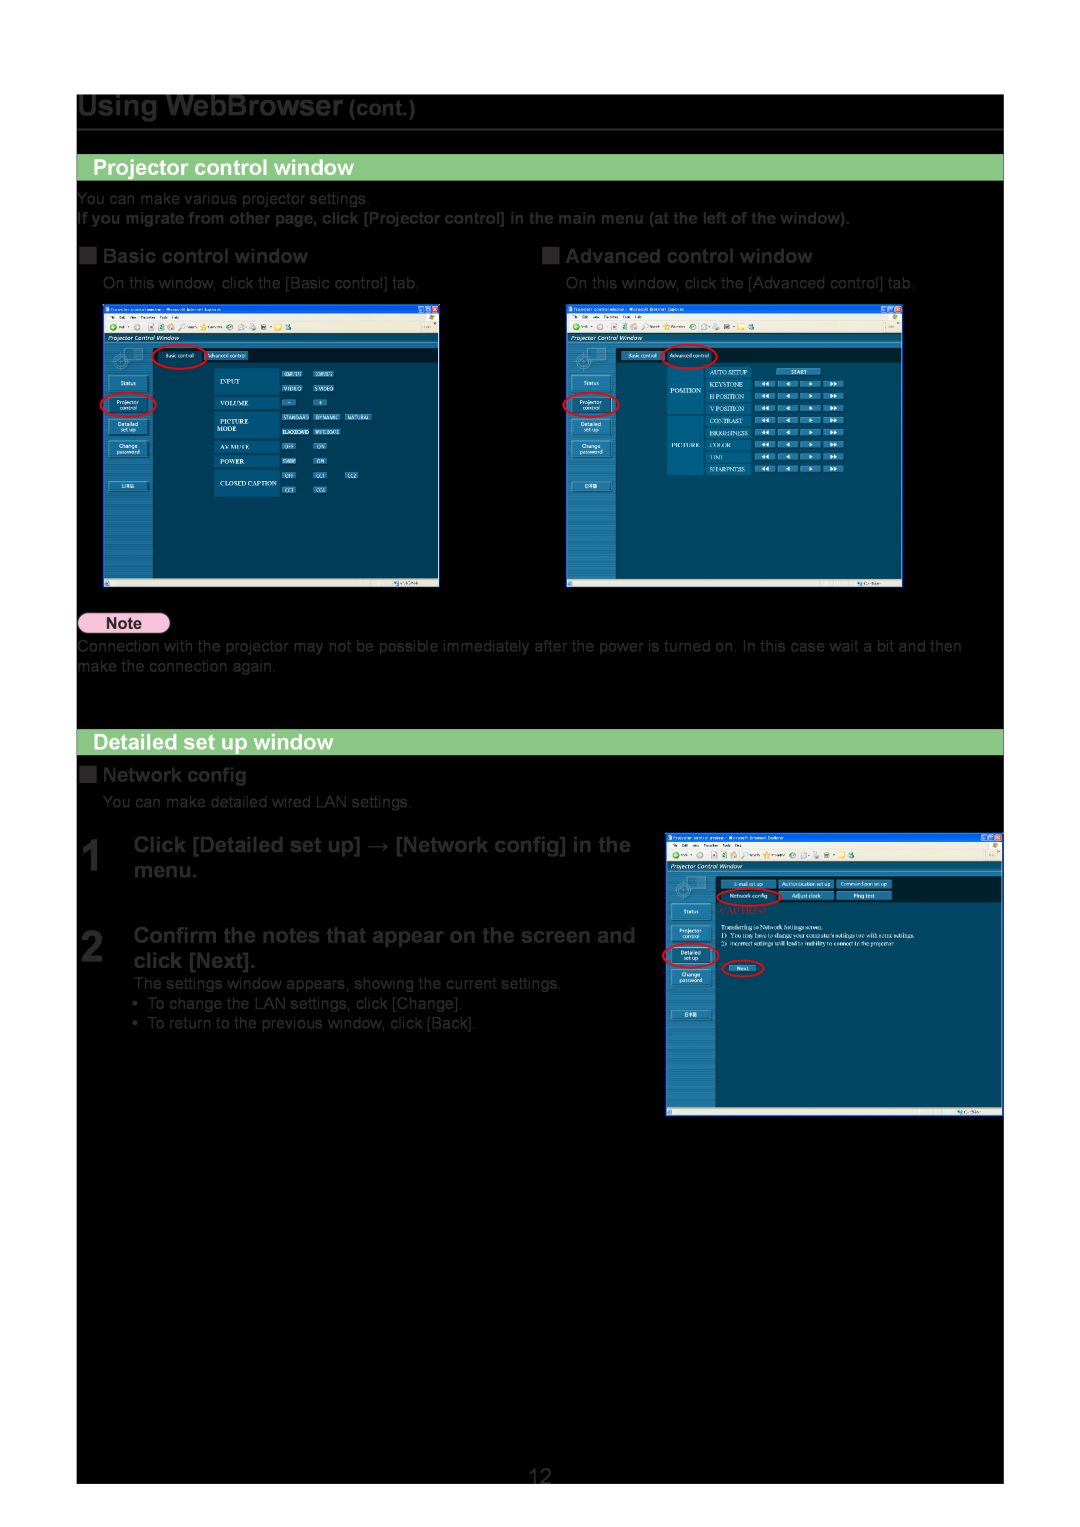 Panasonic TQBH0228, PT-ST10U Using WebBrowser cont, Projector control window, Detailed set up window, menu, click Next 